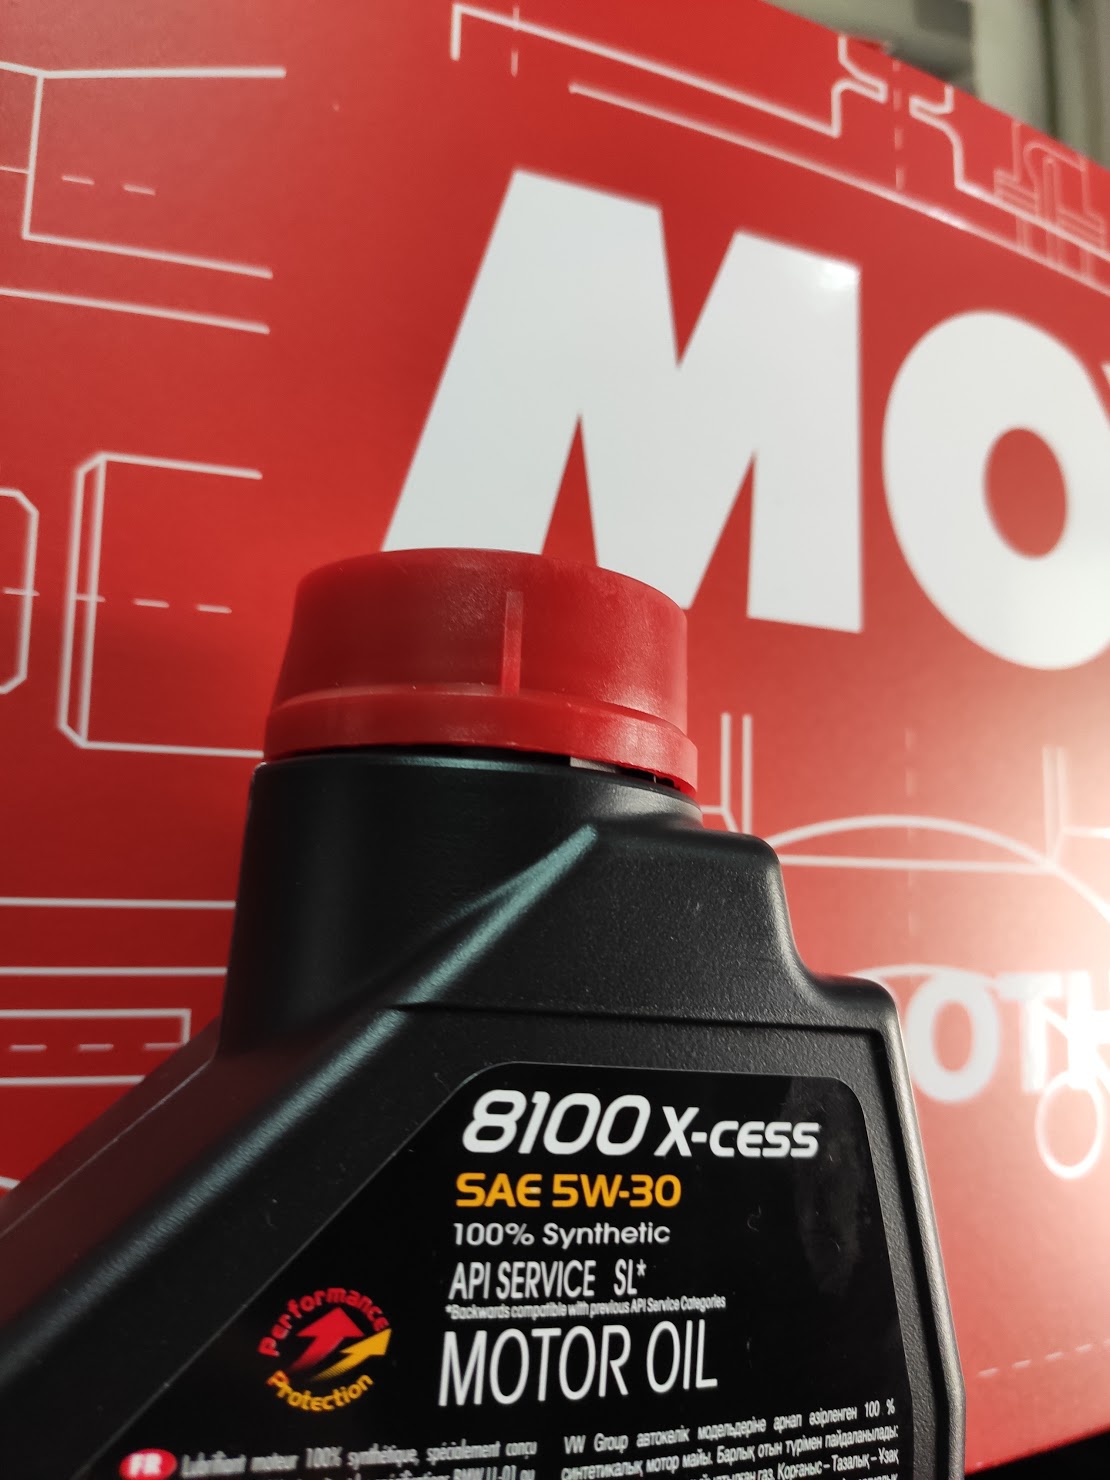 Встречайте новое масло Motul 8100 x-cess 5w-30 